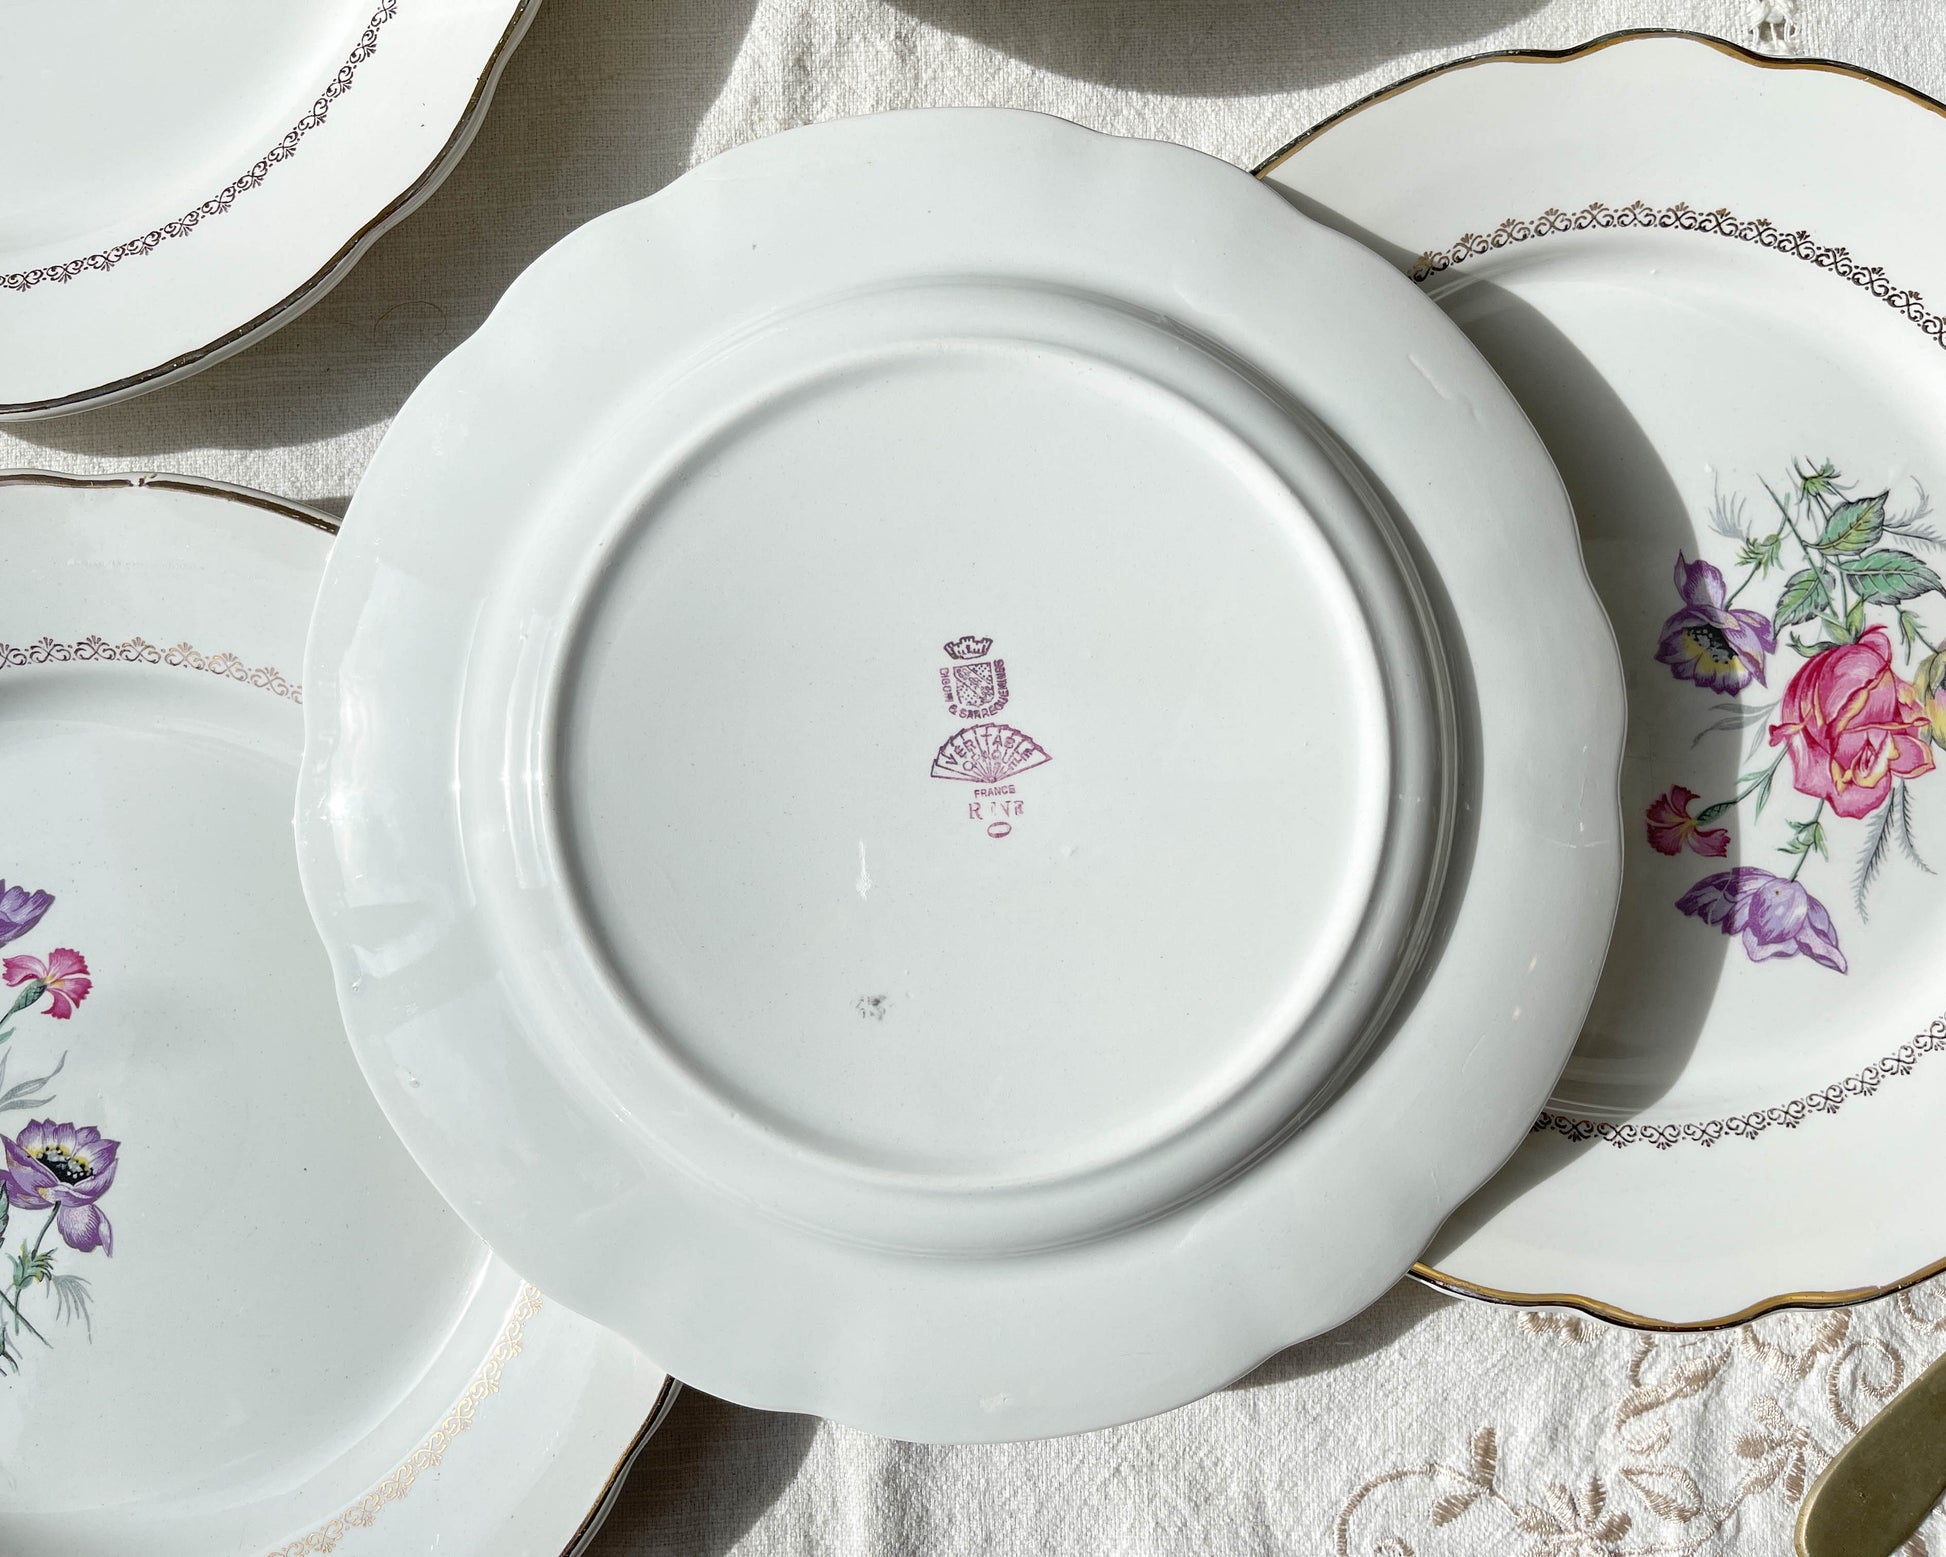 6 Assiettes plates porcelaine DIGOIN & SARREGUEMINES modèle Rene made in France 1950